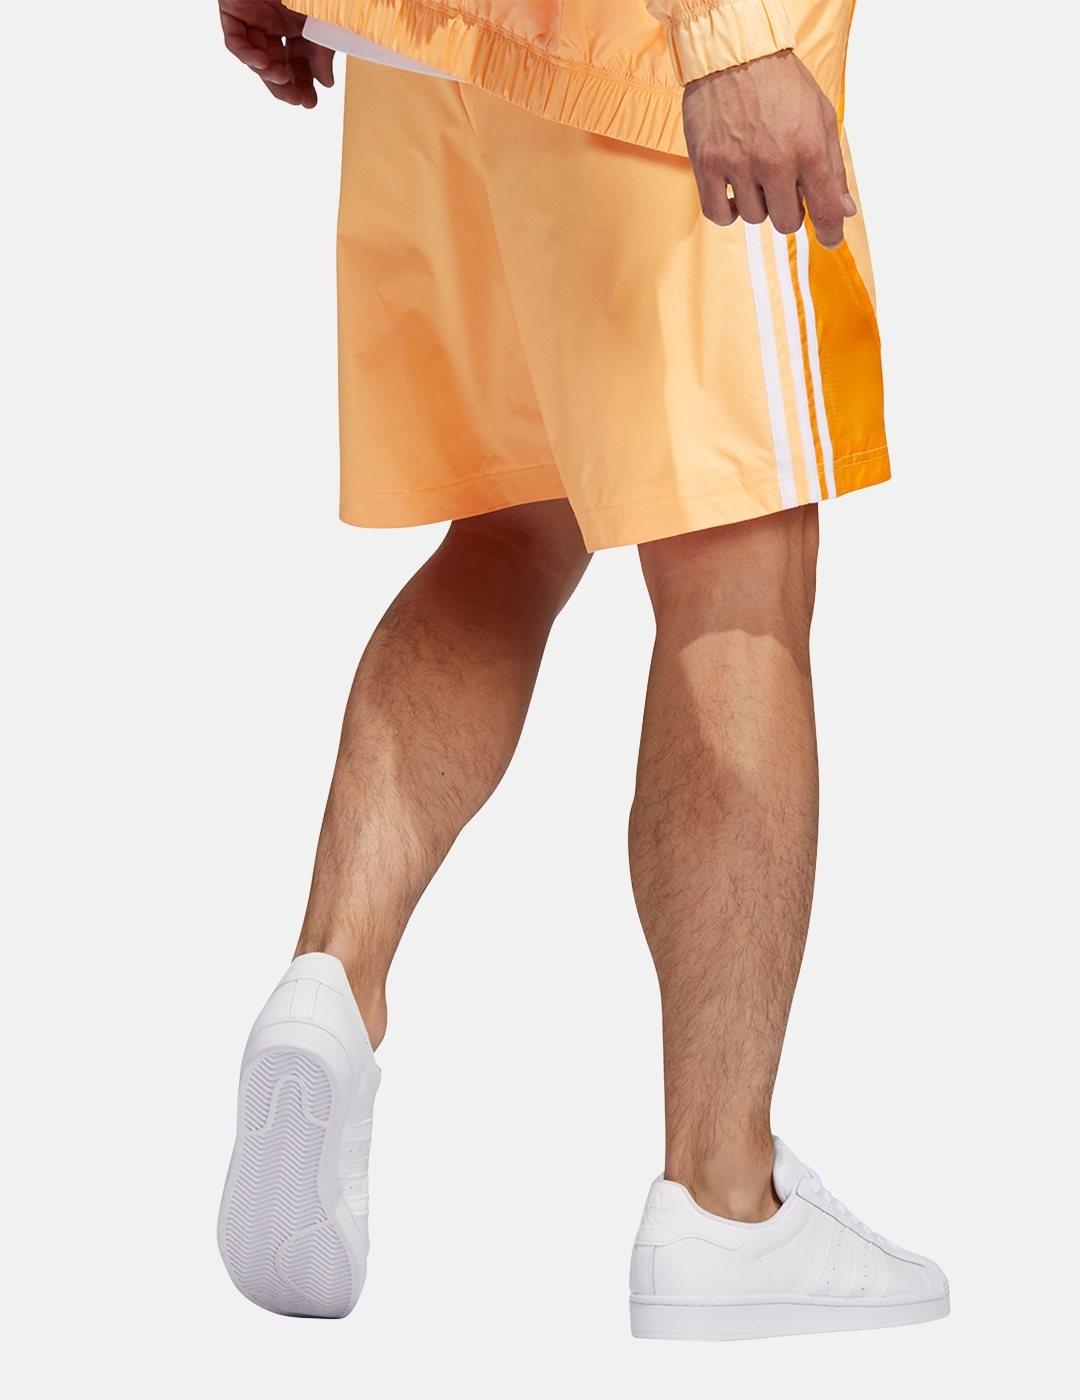 Bermudas adidas Summer Superstar Naranja Para Hombre